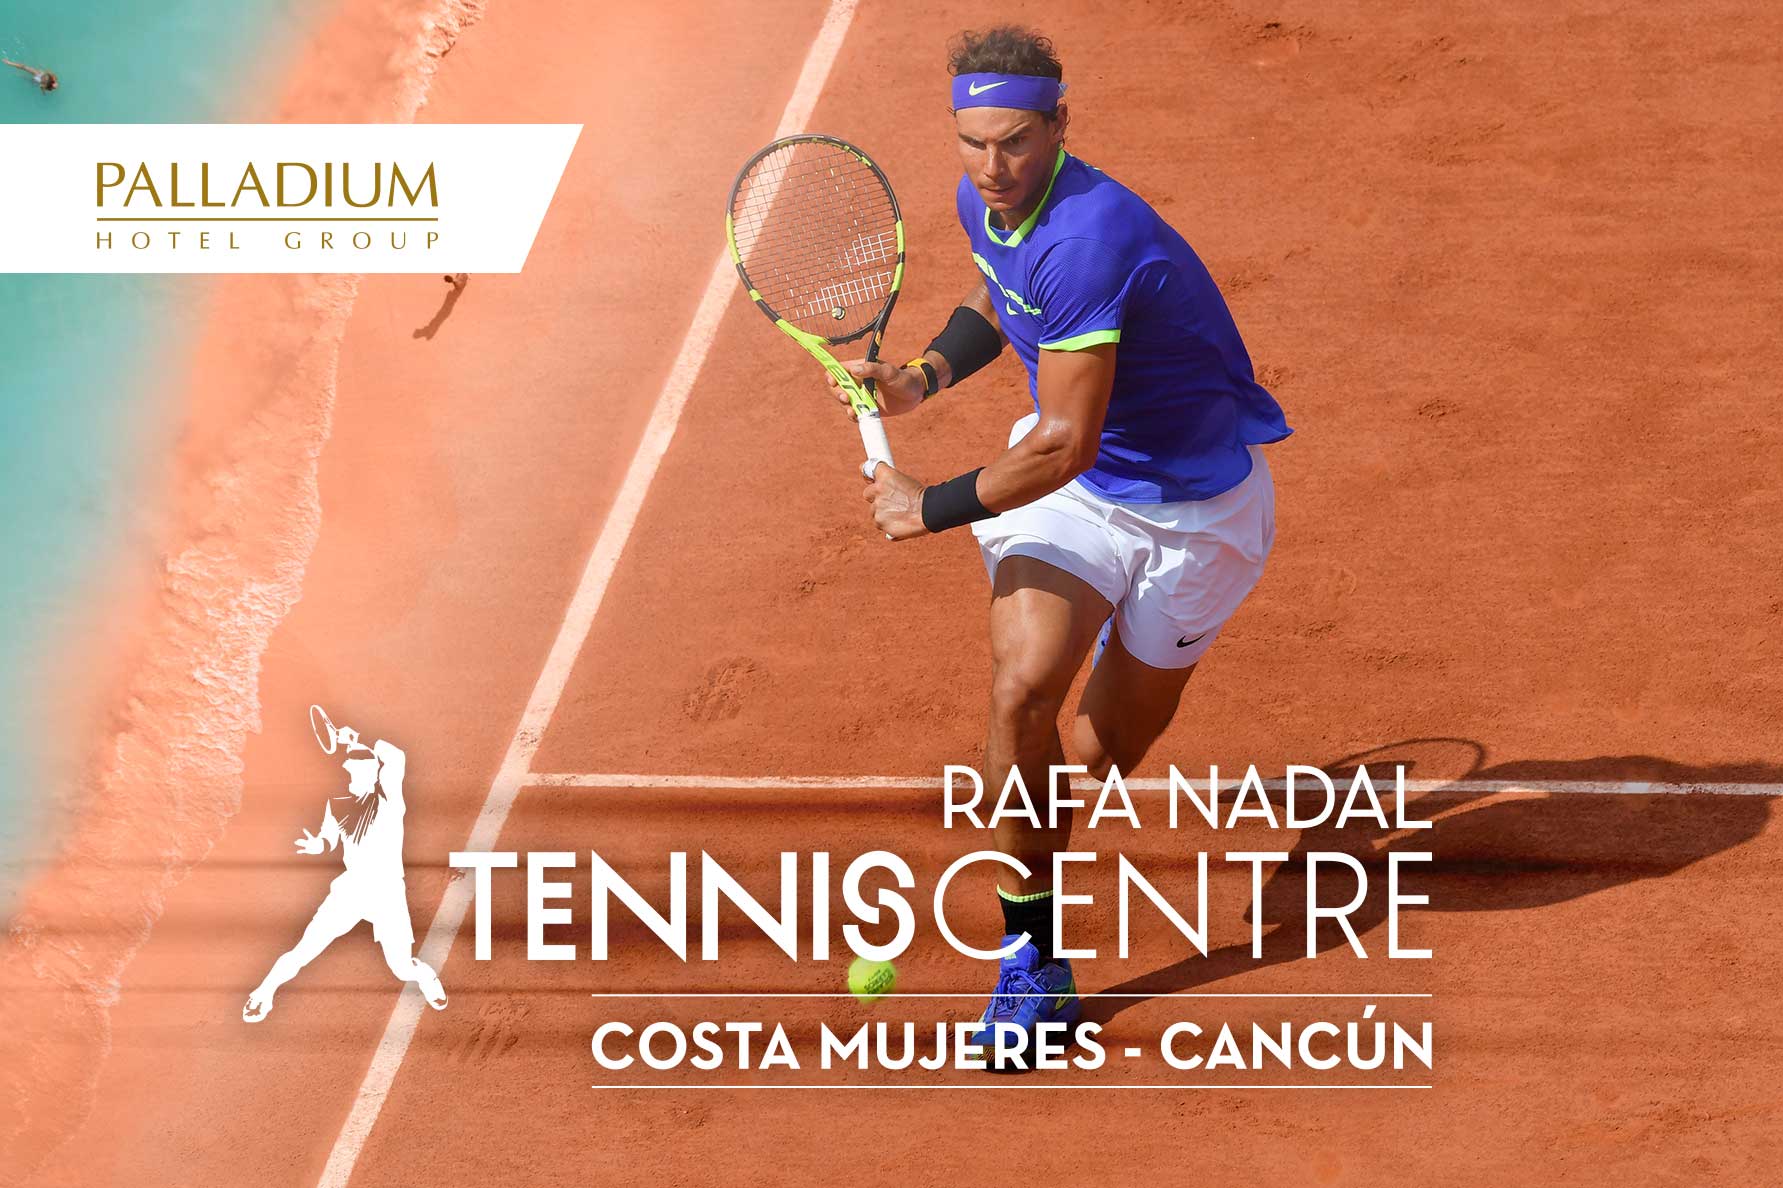 Rafa Nadal Tennis Centre Costa Mujeres